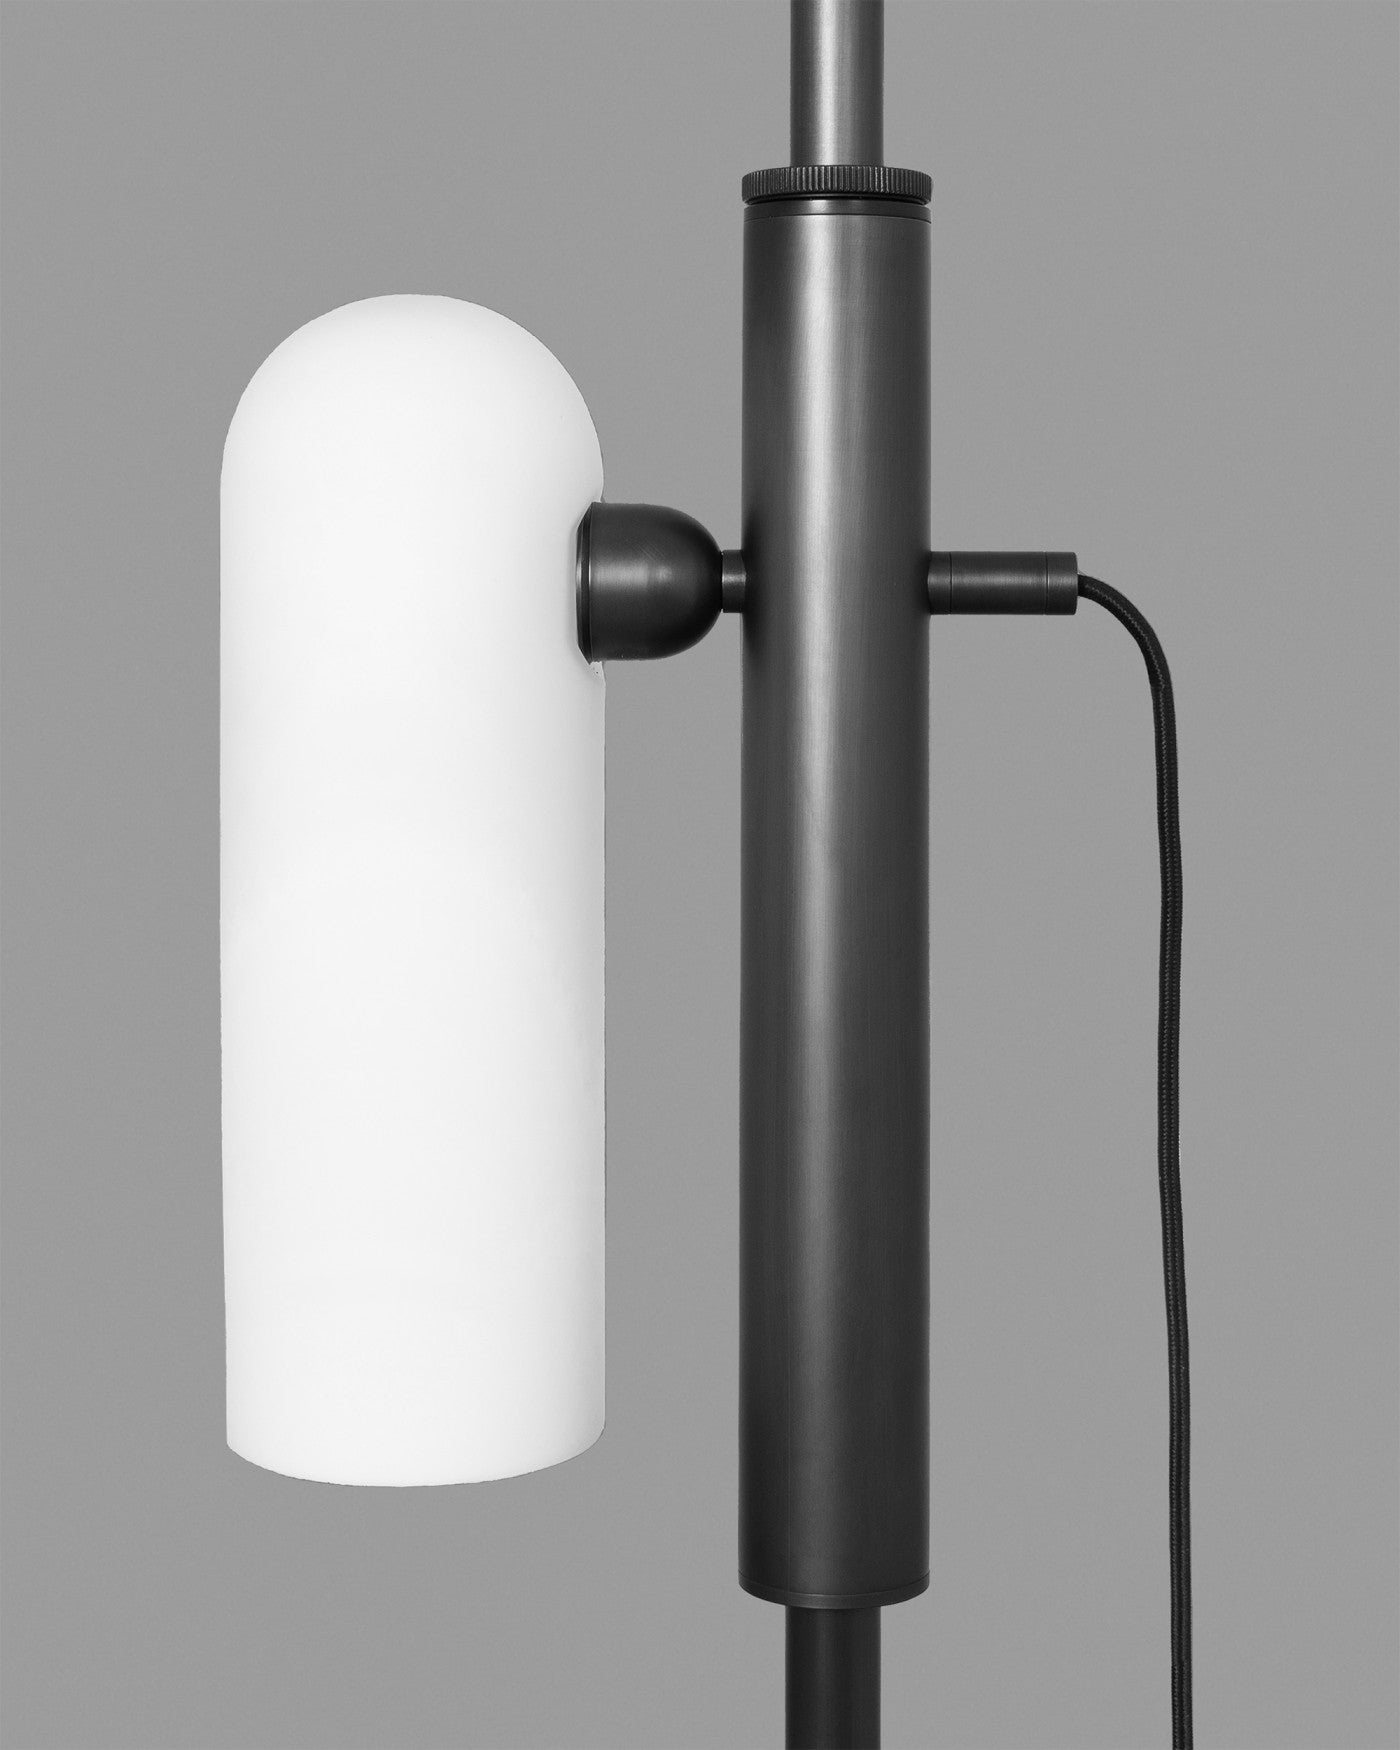 ODYSSEY 1 - Floor Lamp